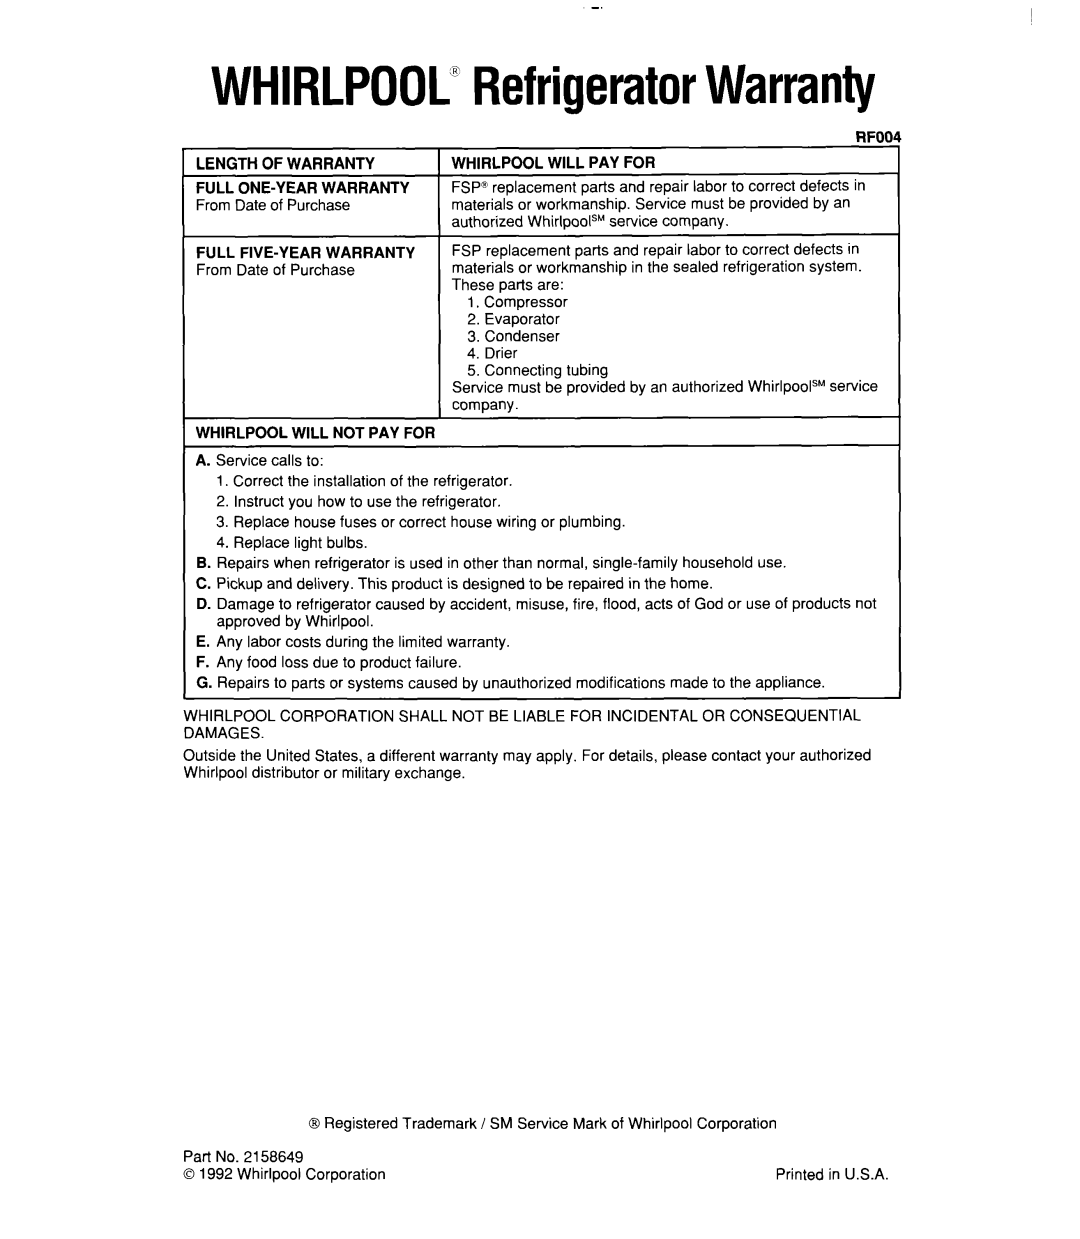 Whirlpool 6ET20RK, 3ET22RK manual WHIRLPOOLERefrigeratorWarranty, Full Five-Yearwarranty, Whirlpool Will Pay For 